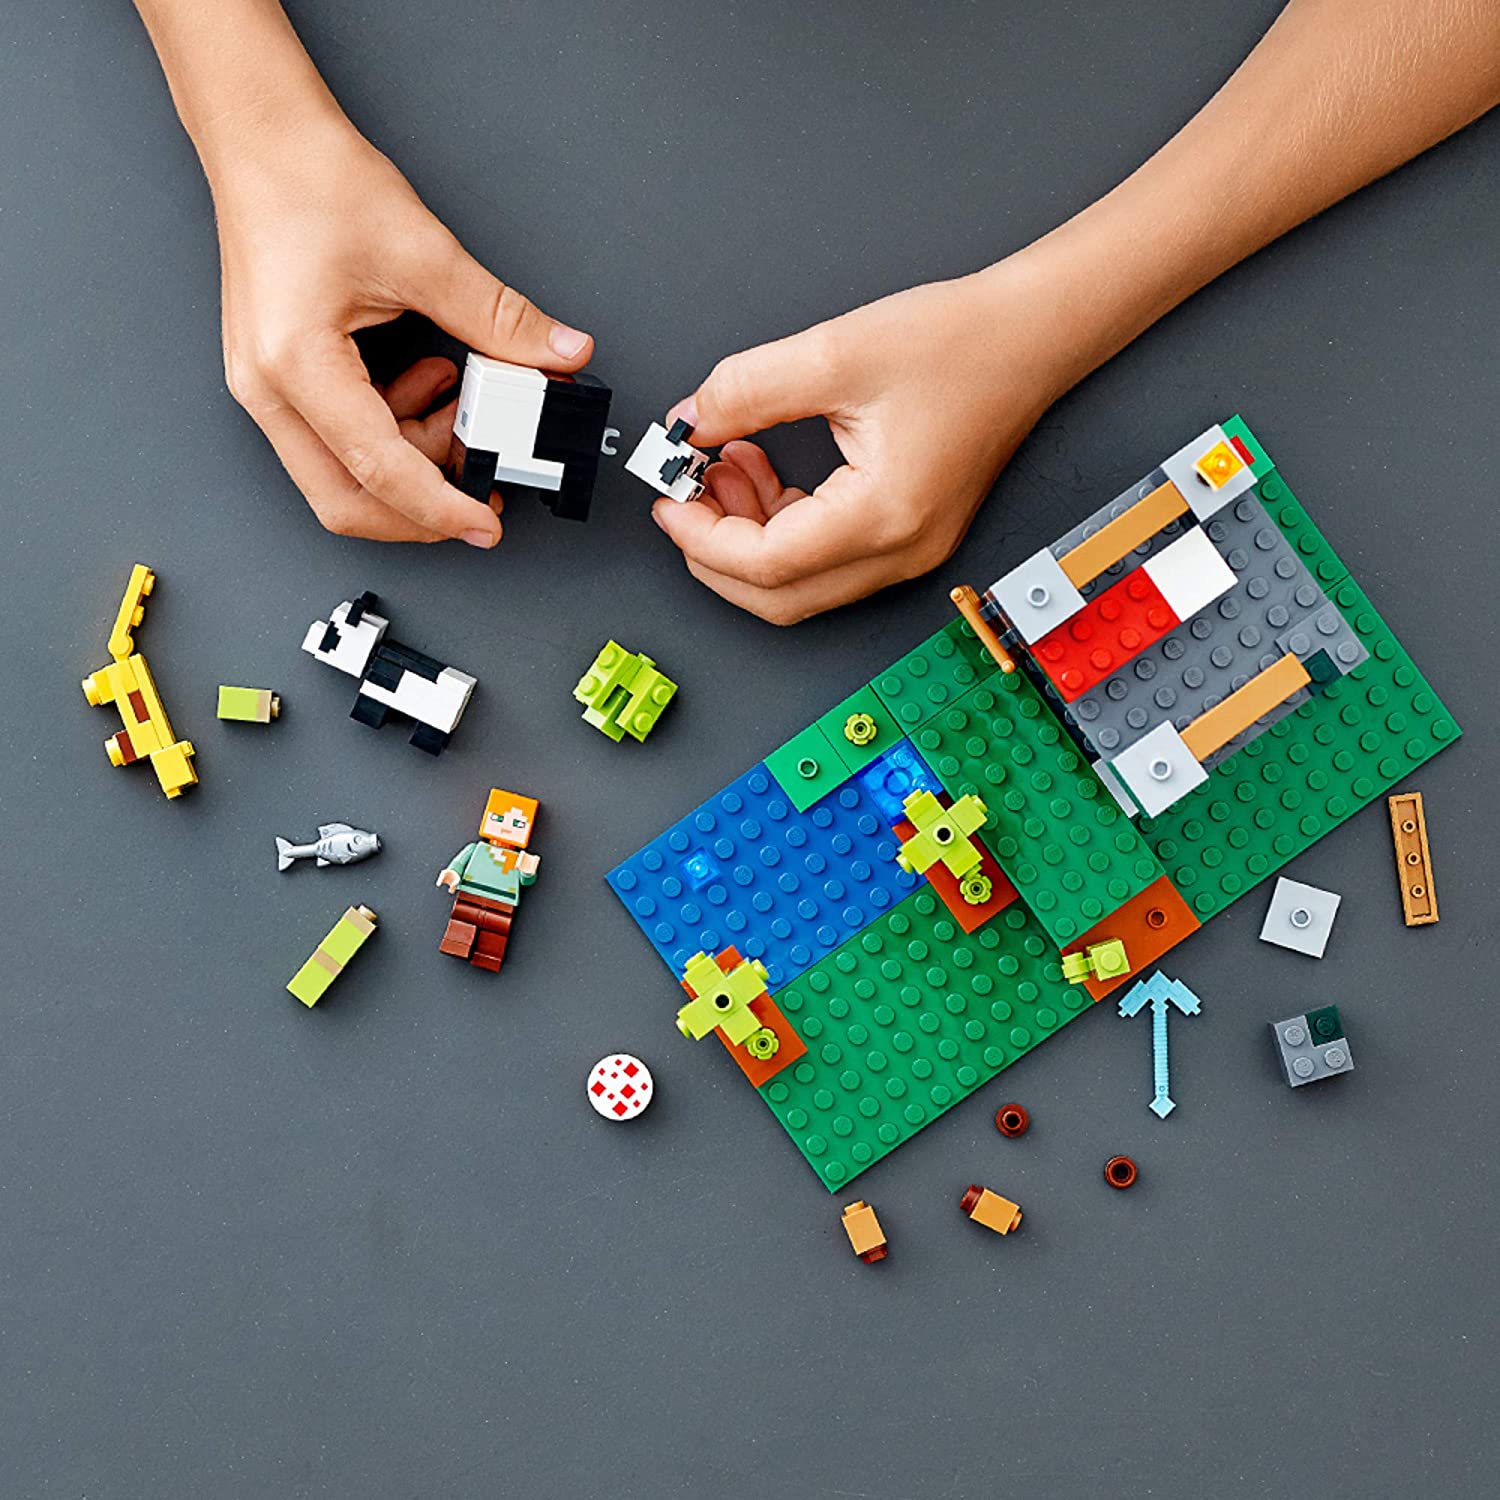 LEGO Minecraft Building Set